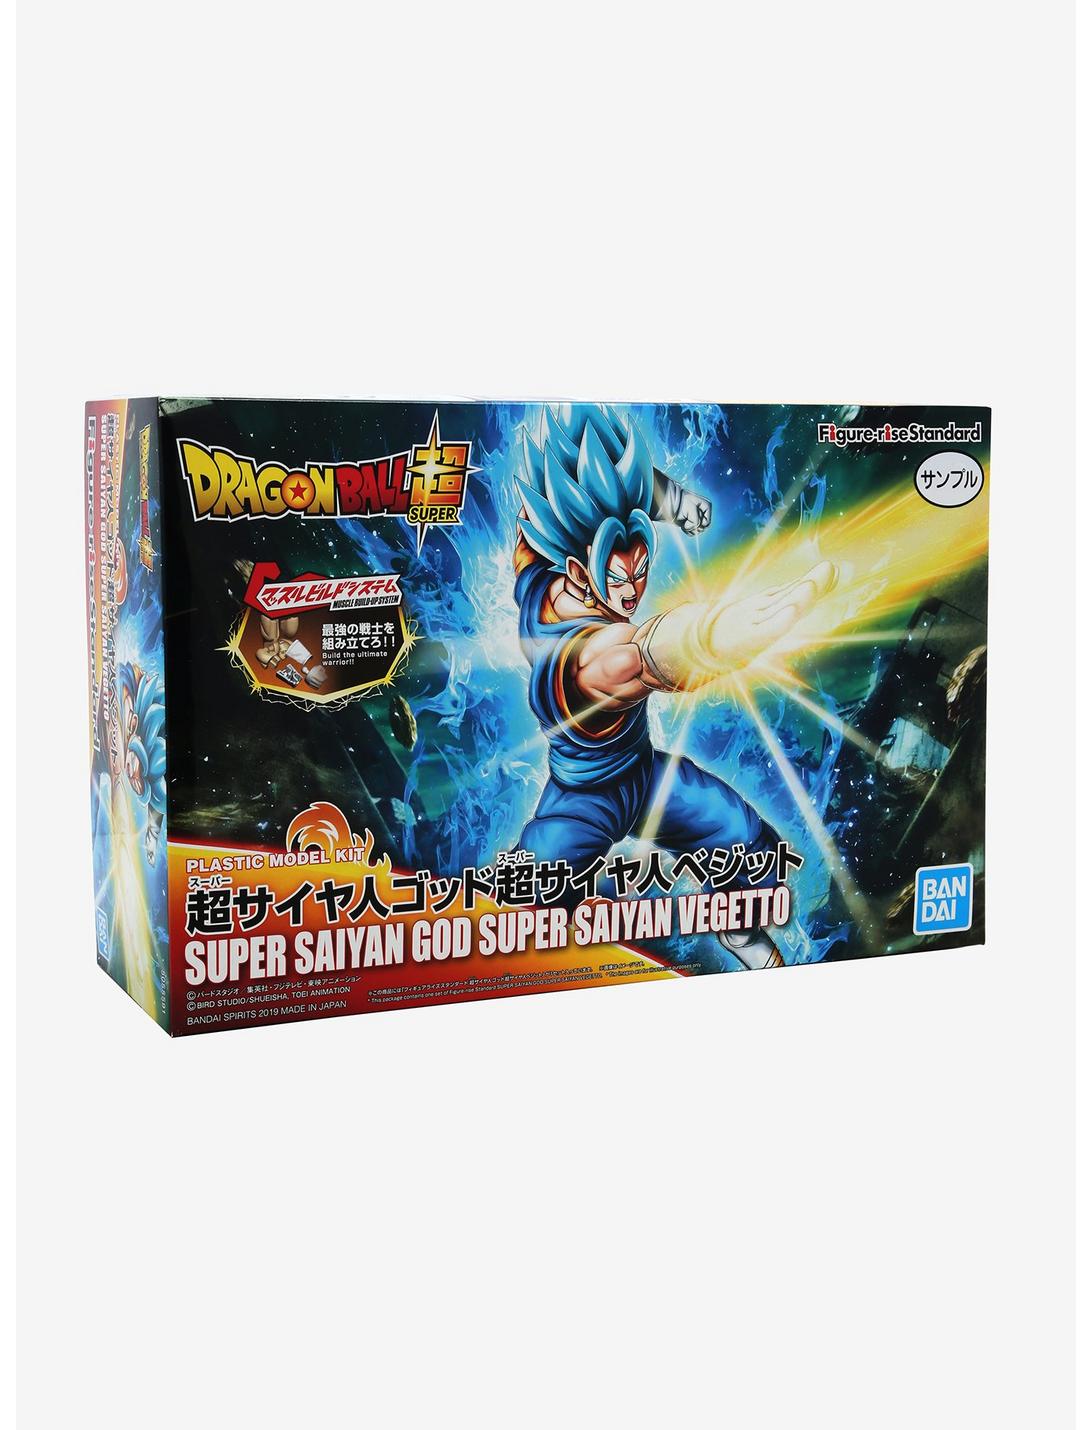 Bandai Figure-Rise Standard Dragon Ball Z Super Saiyan God Super Saiyan Vegetto Plastic Model Kit, , hi-res